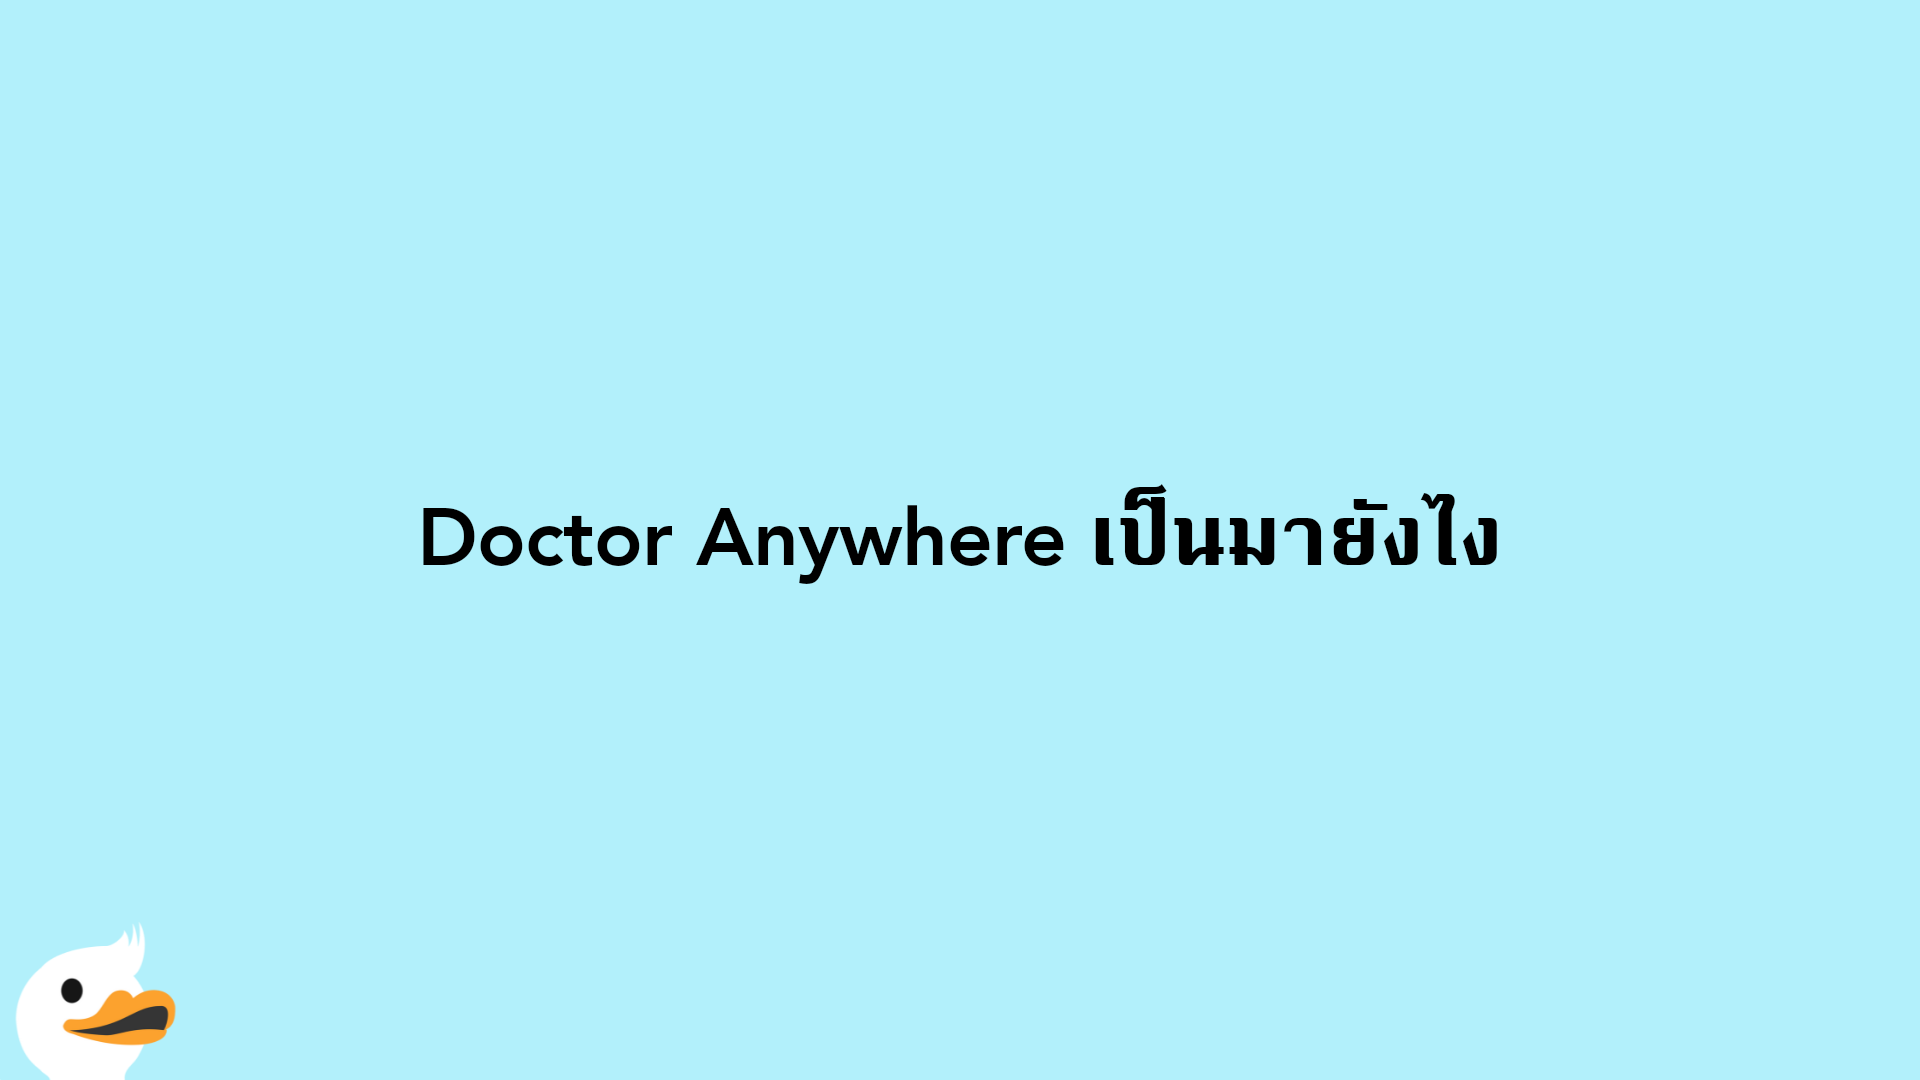 Doctor Anywhere เป็นมายังไง